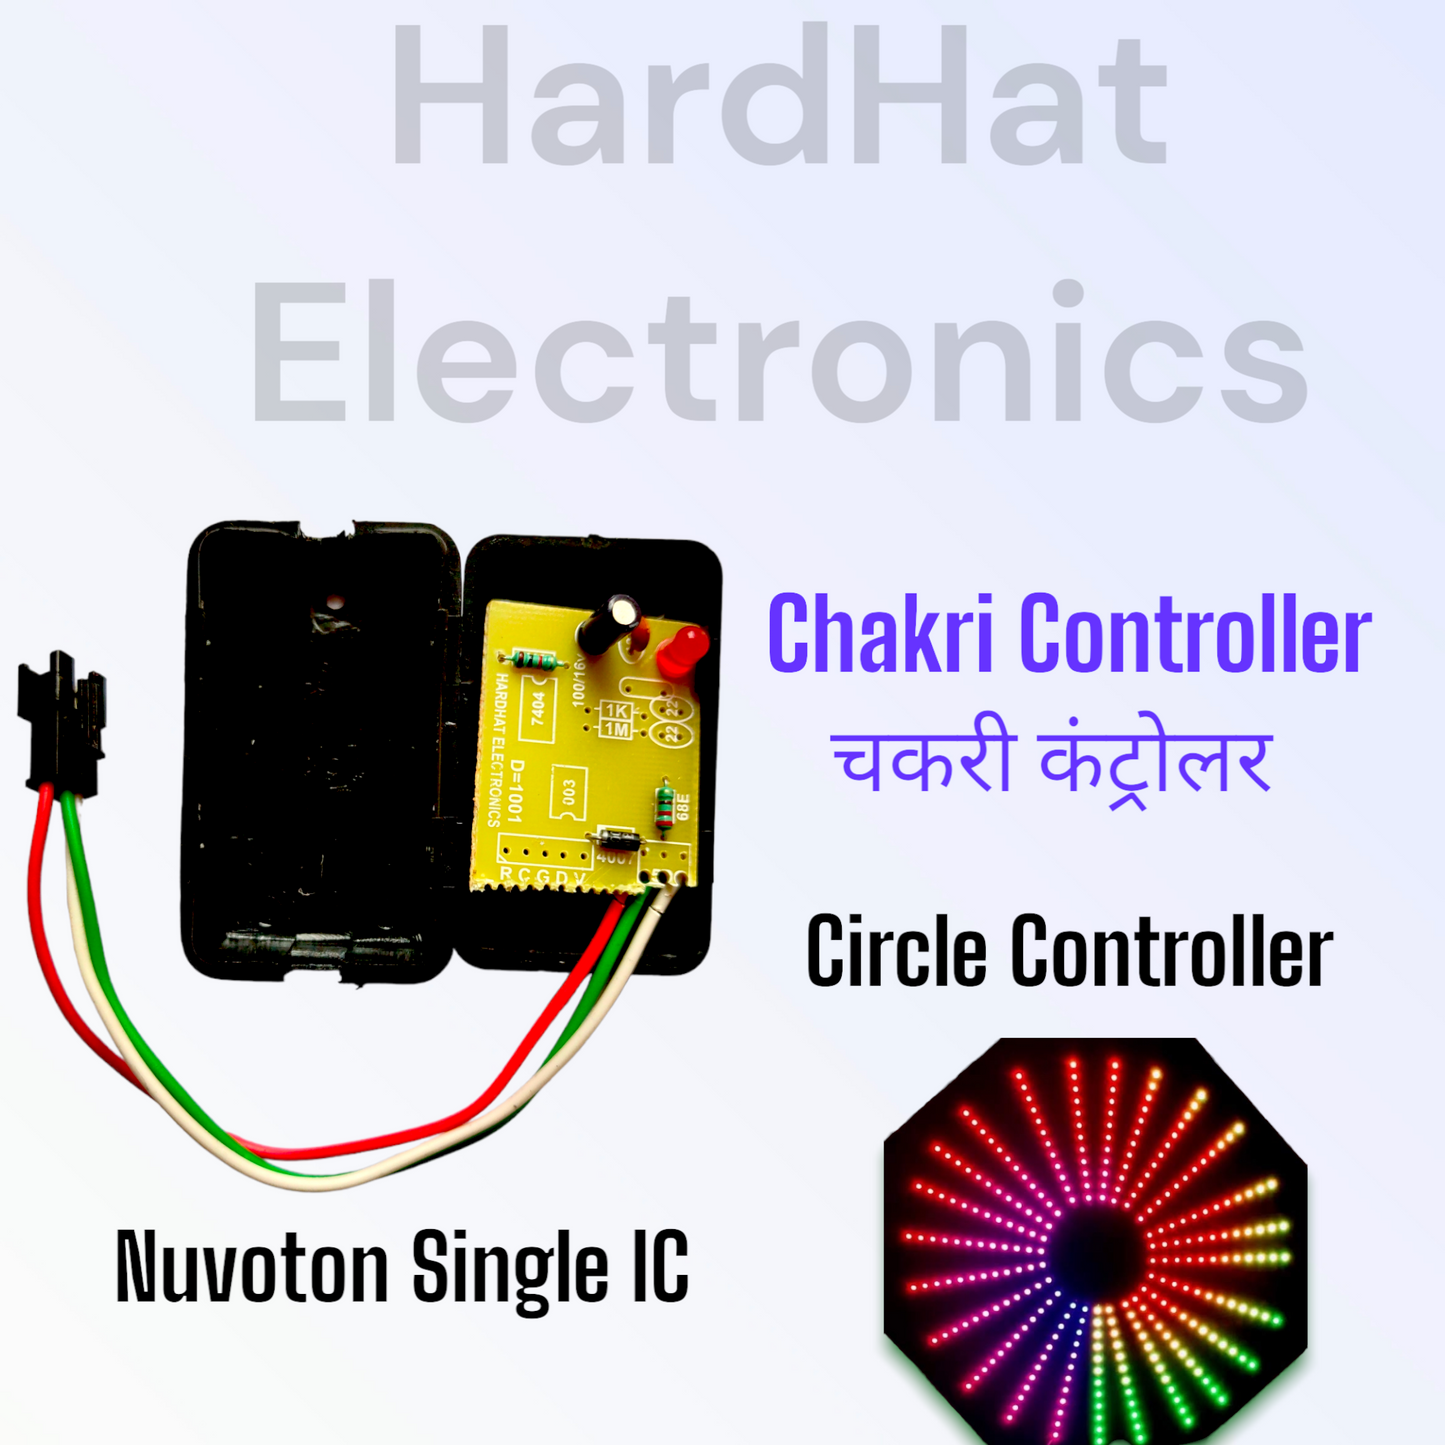 Chakri Controller Single IC (Nuvoton)